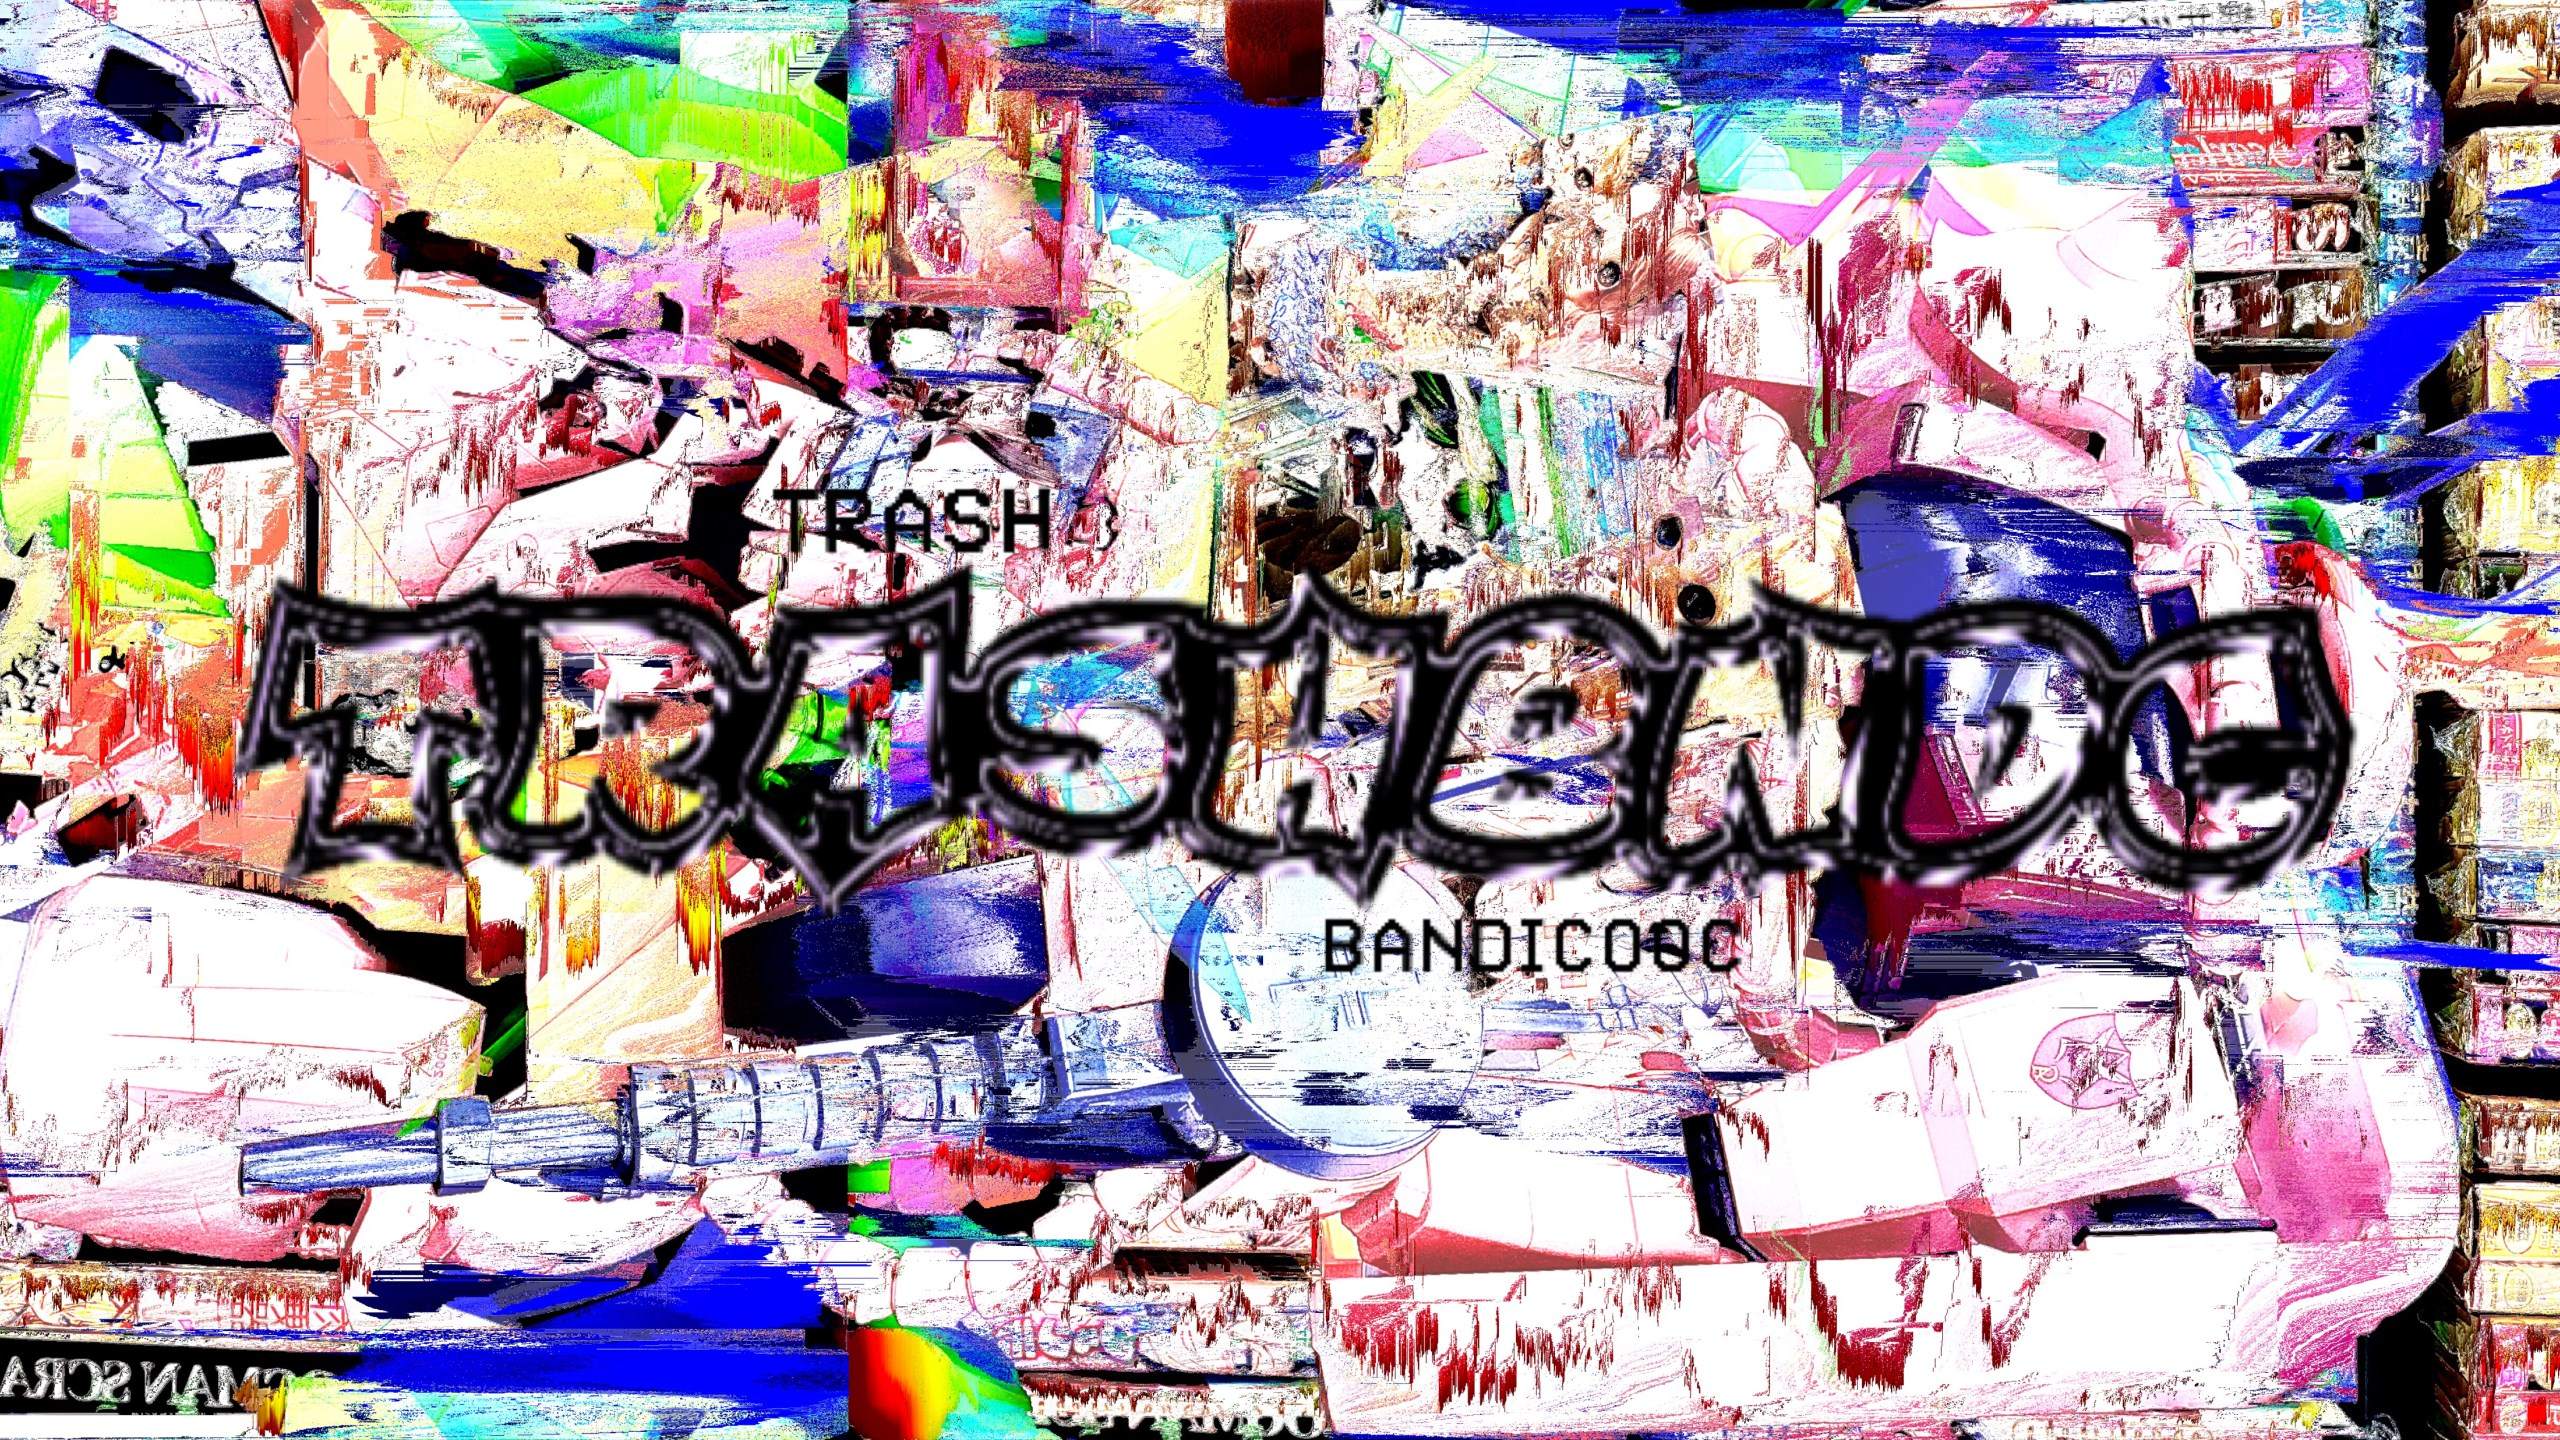 Cover image for Trash Bandicooc